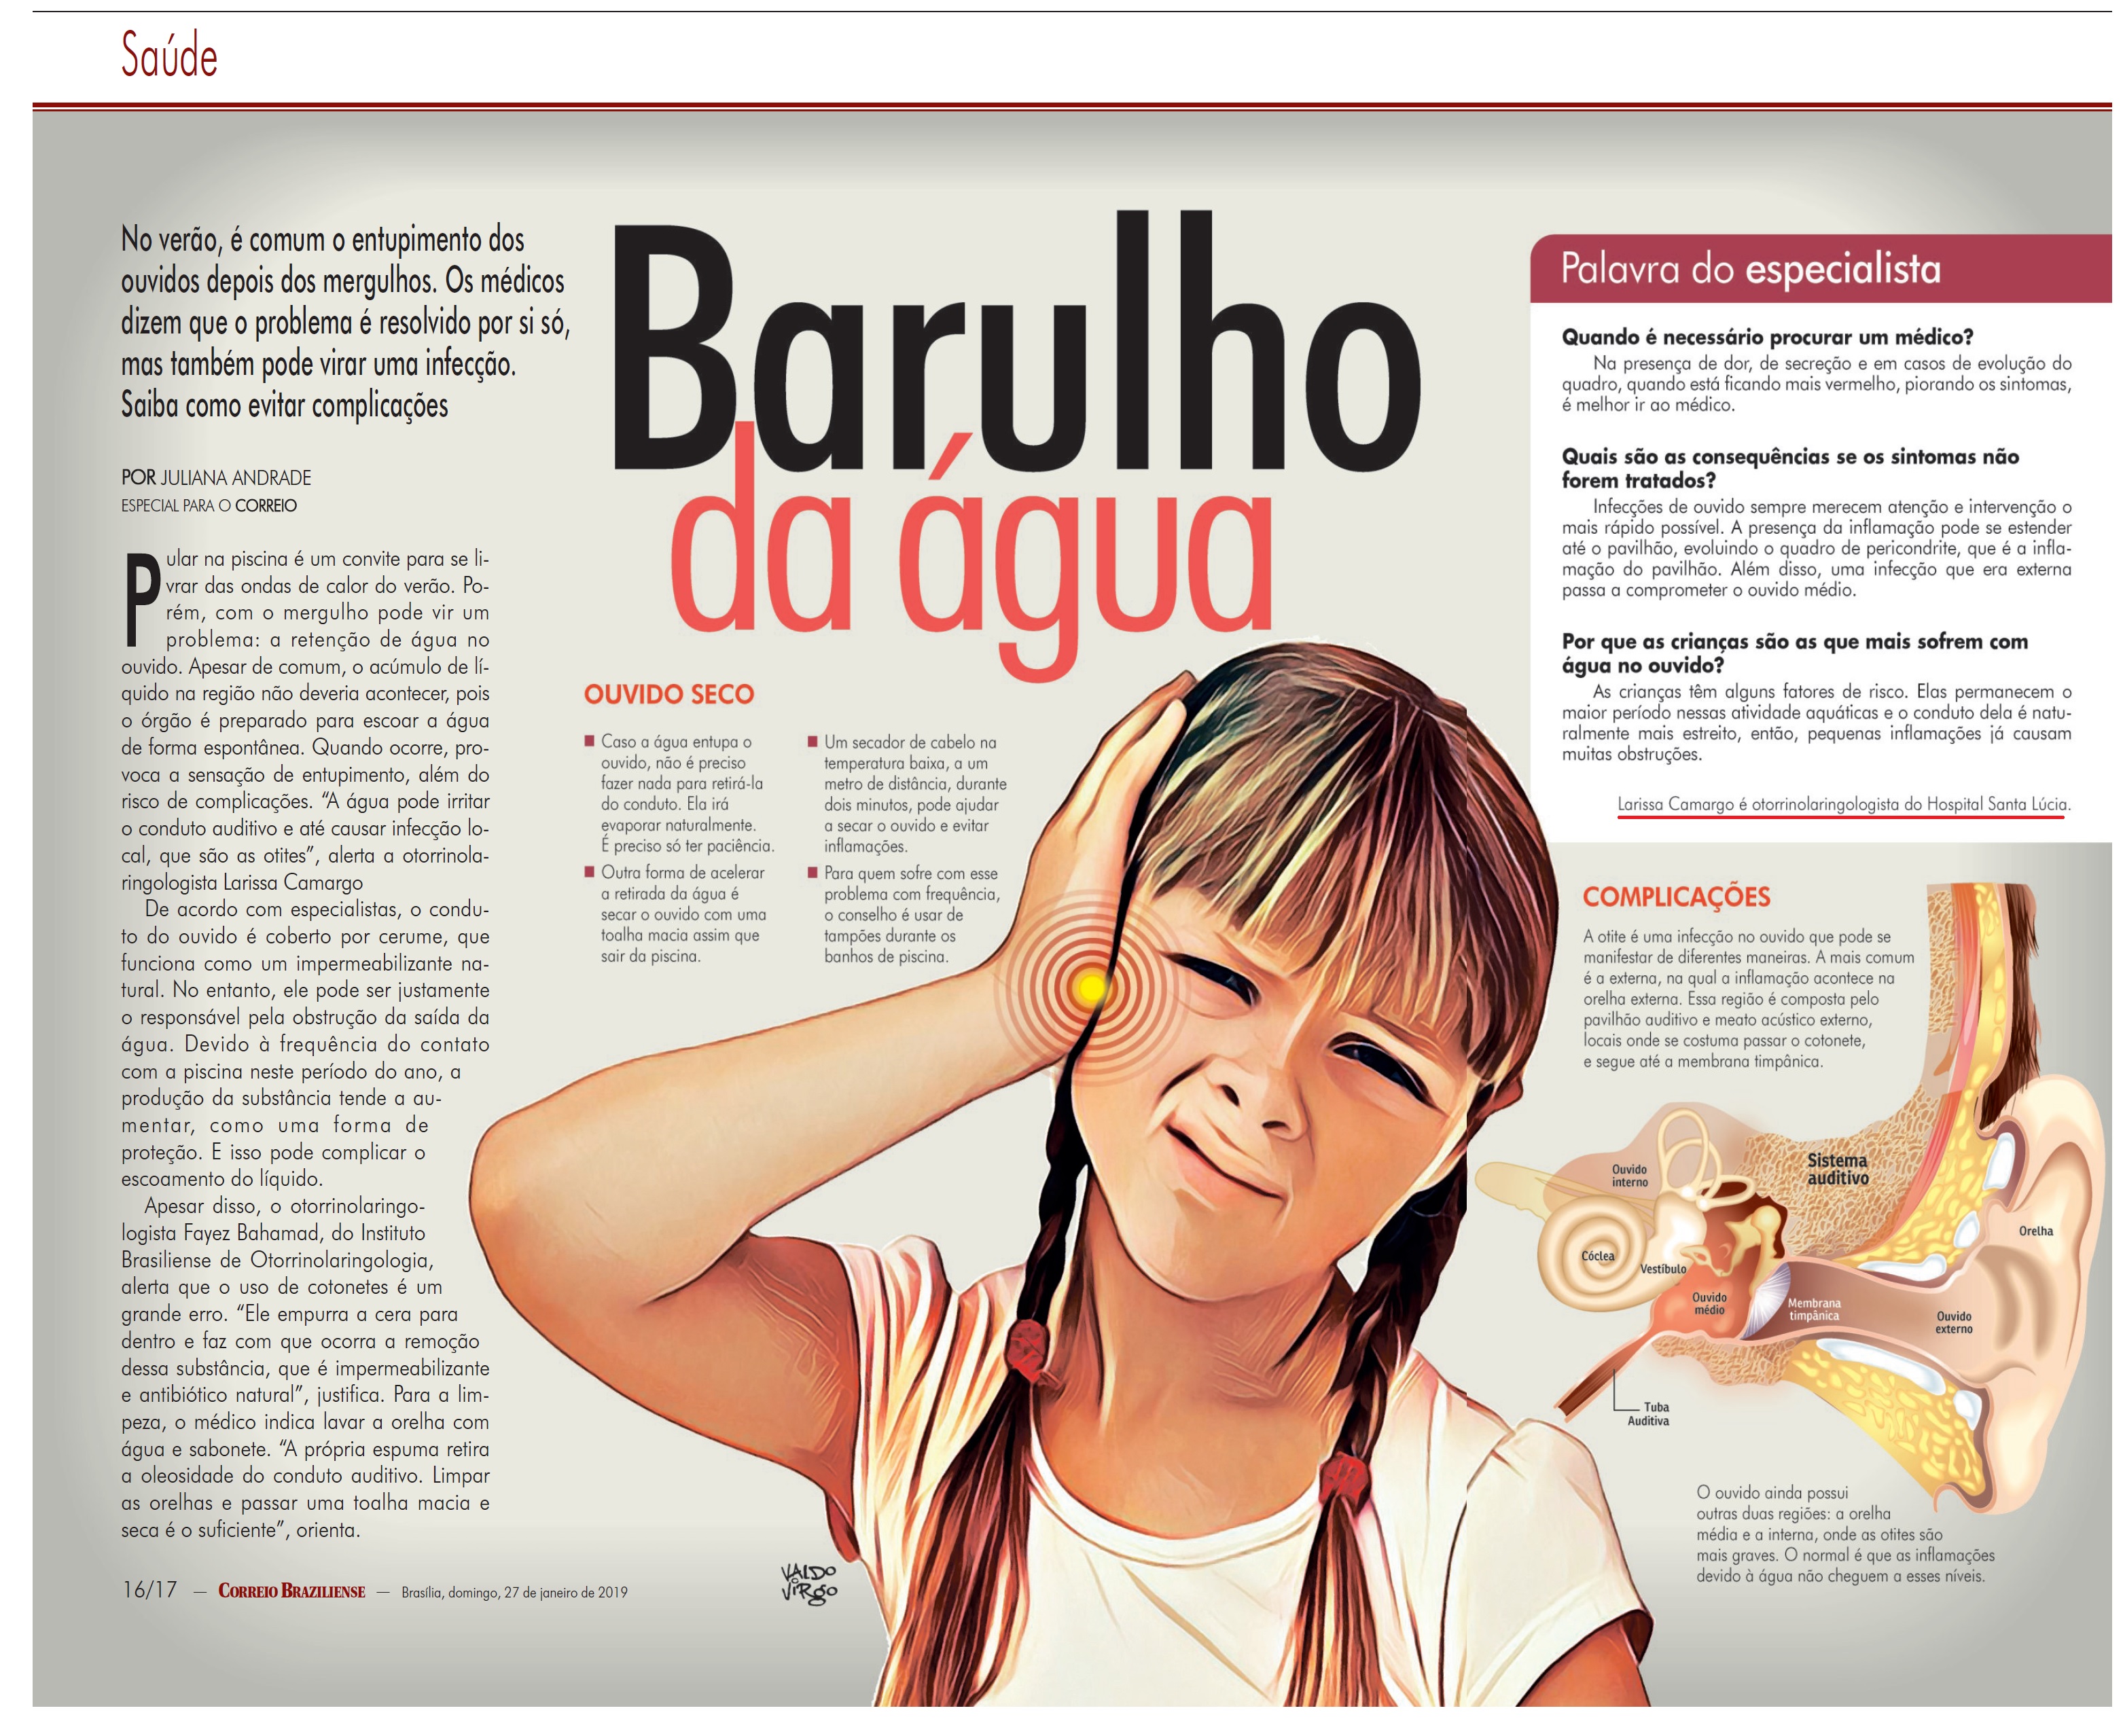 Revista do Correio - Dra. Larissa Camargo HSLS - 27-01-2019